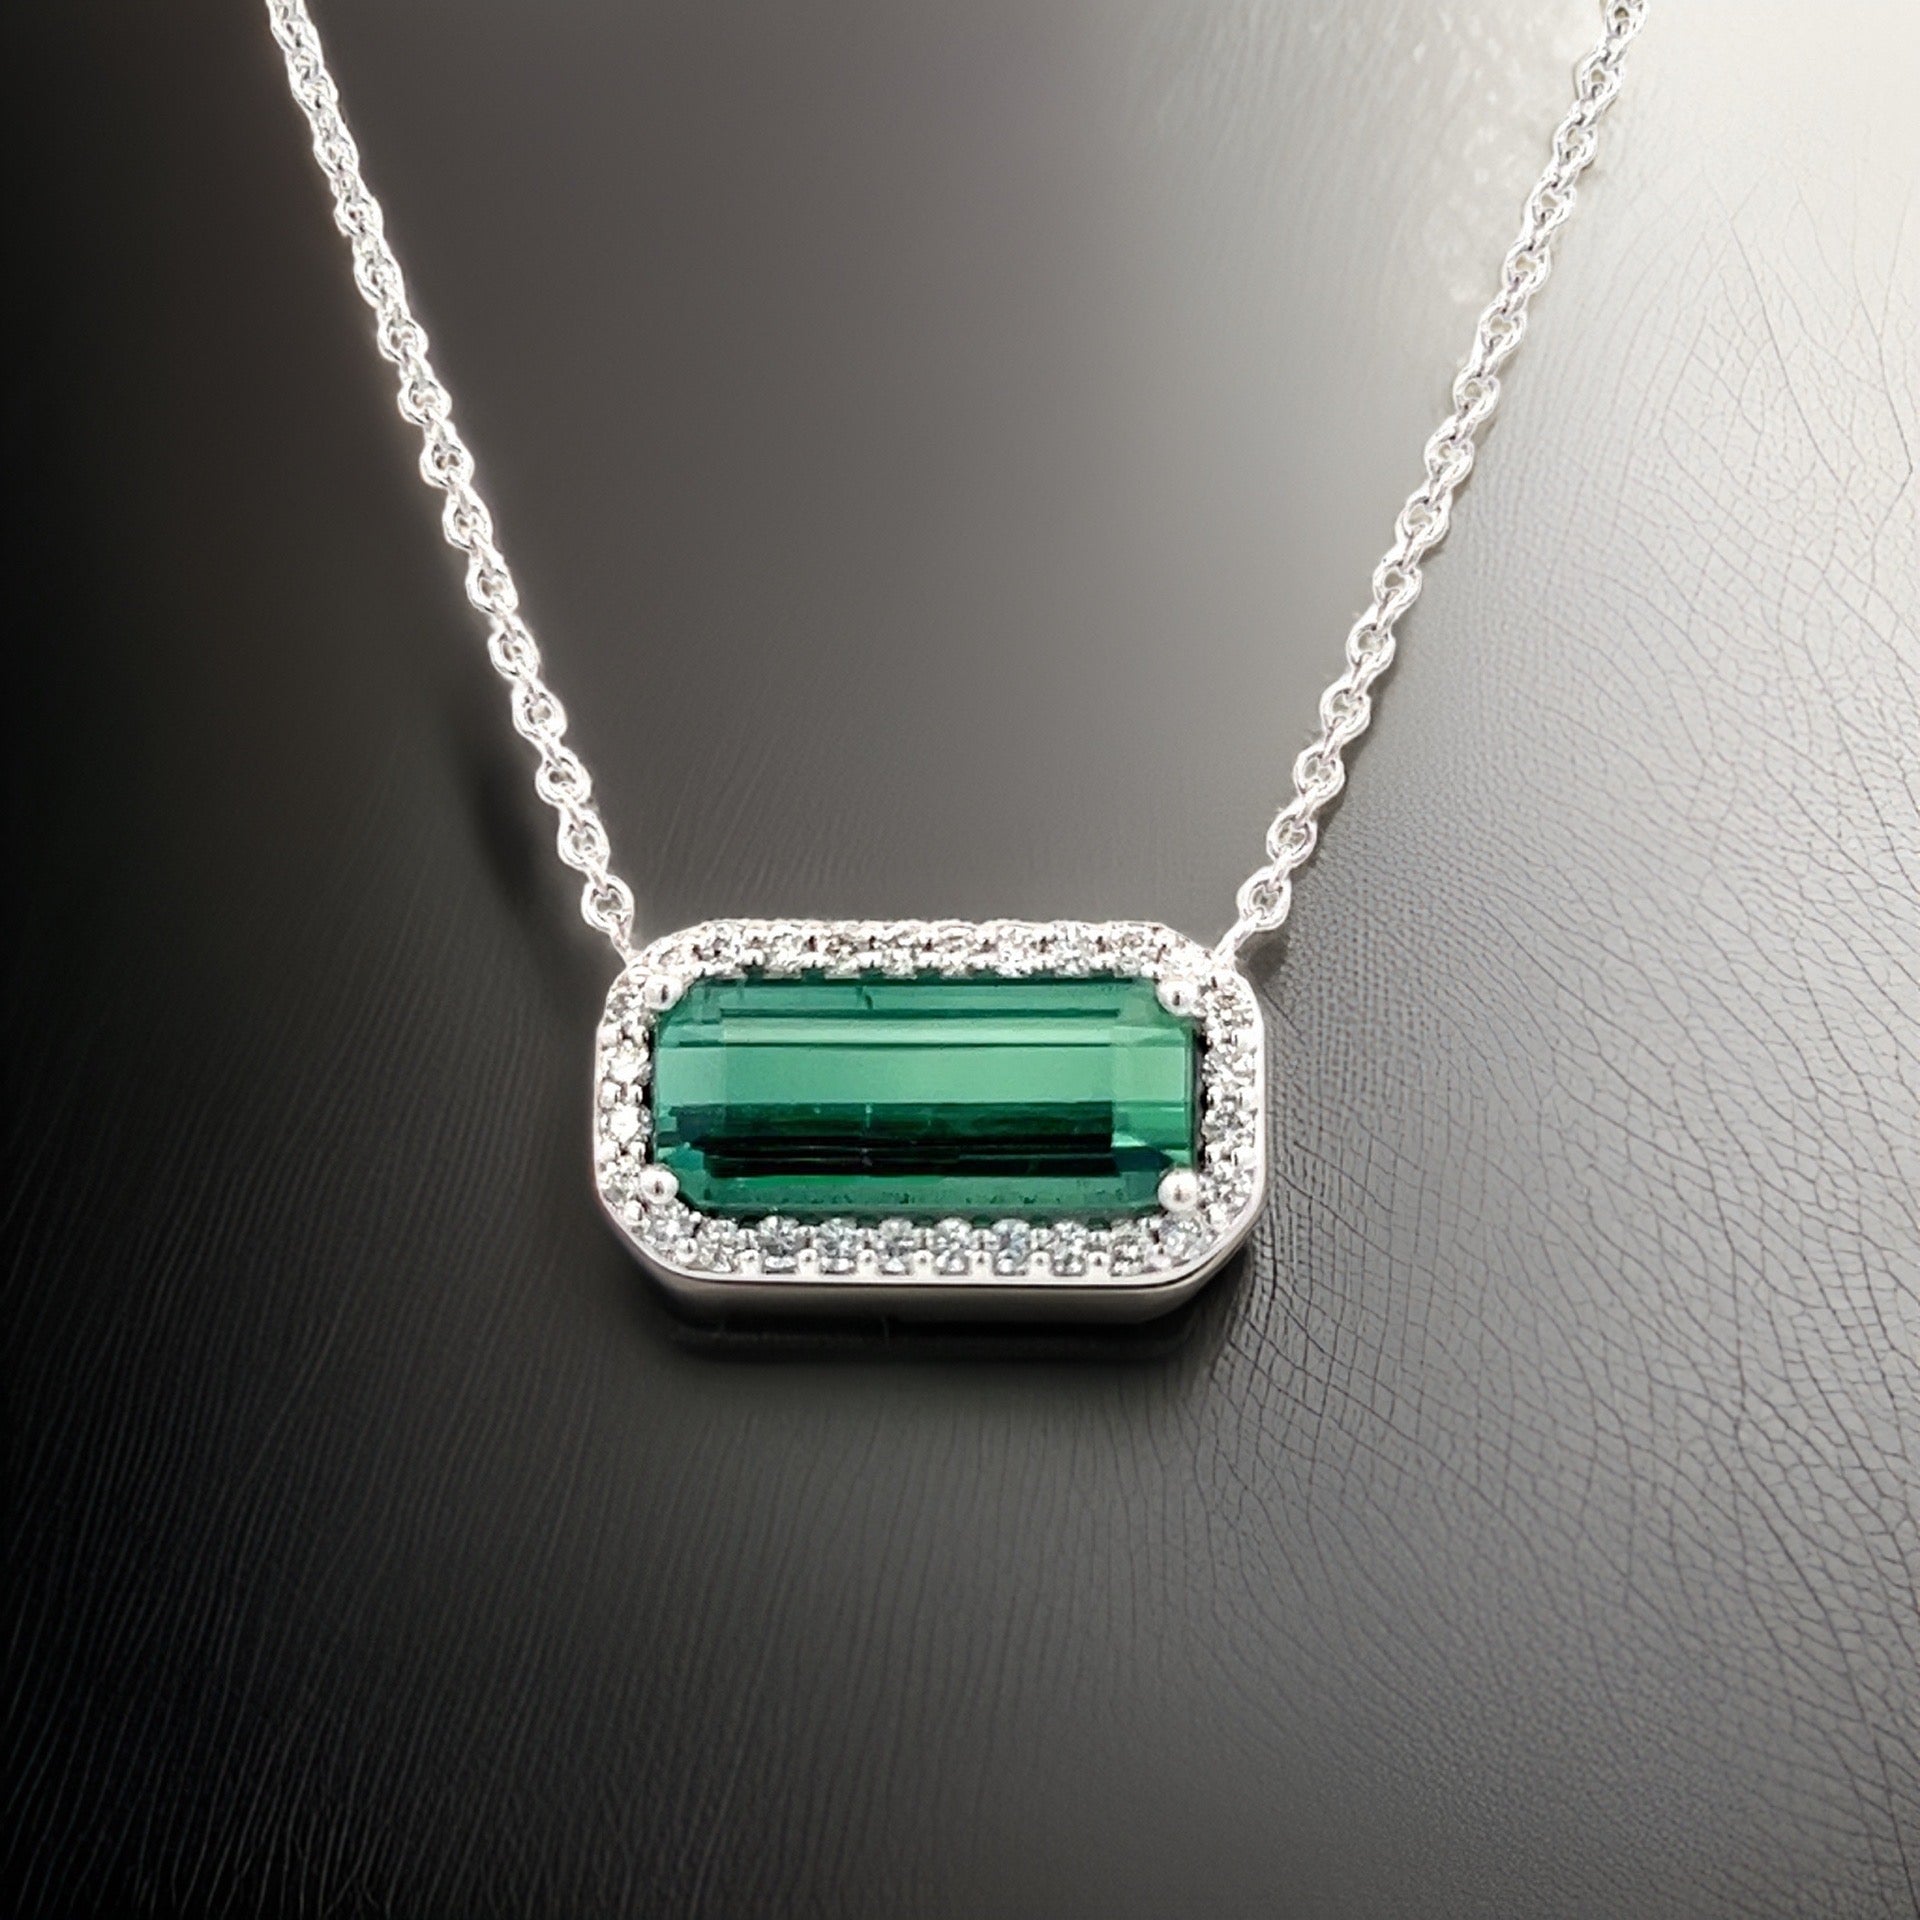 Natural Tourmaline Diamond Pendant Necklace 18" 14k W Gold 3.51 TCW Certified $5,950 311032